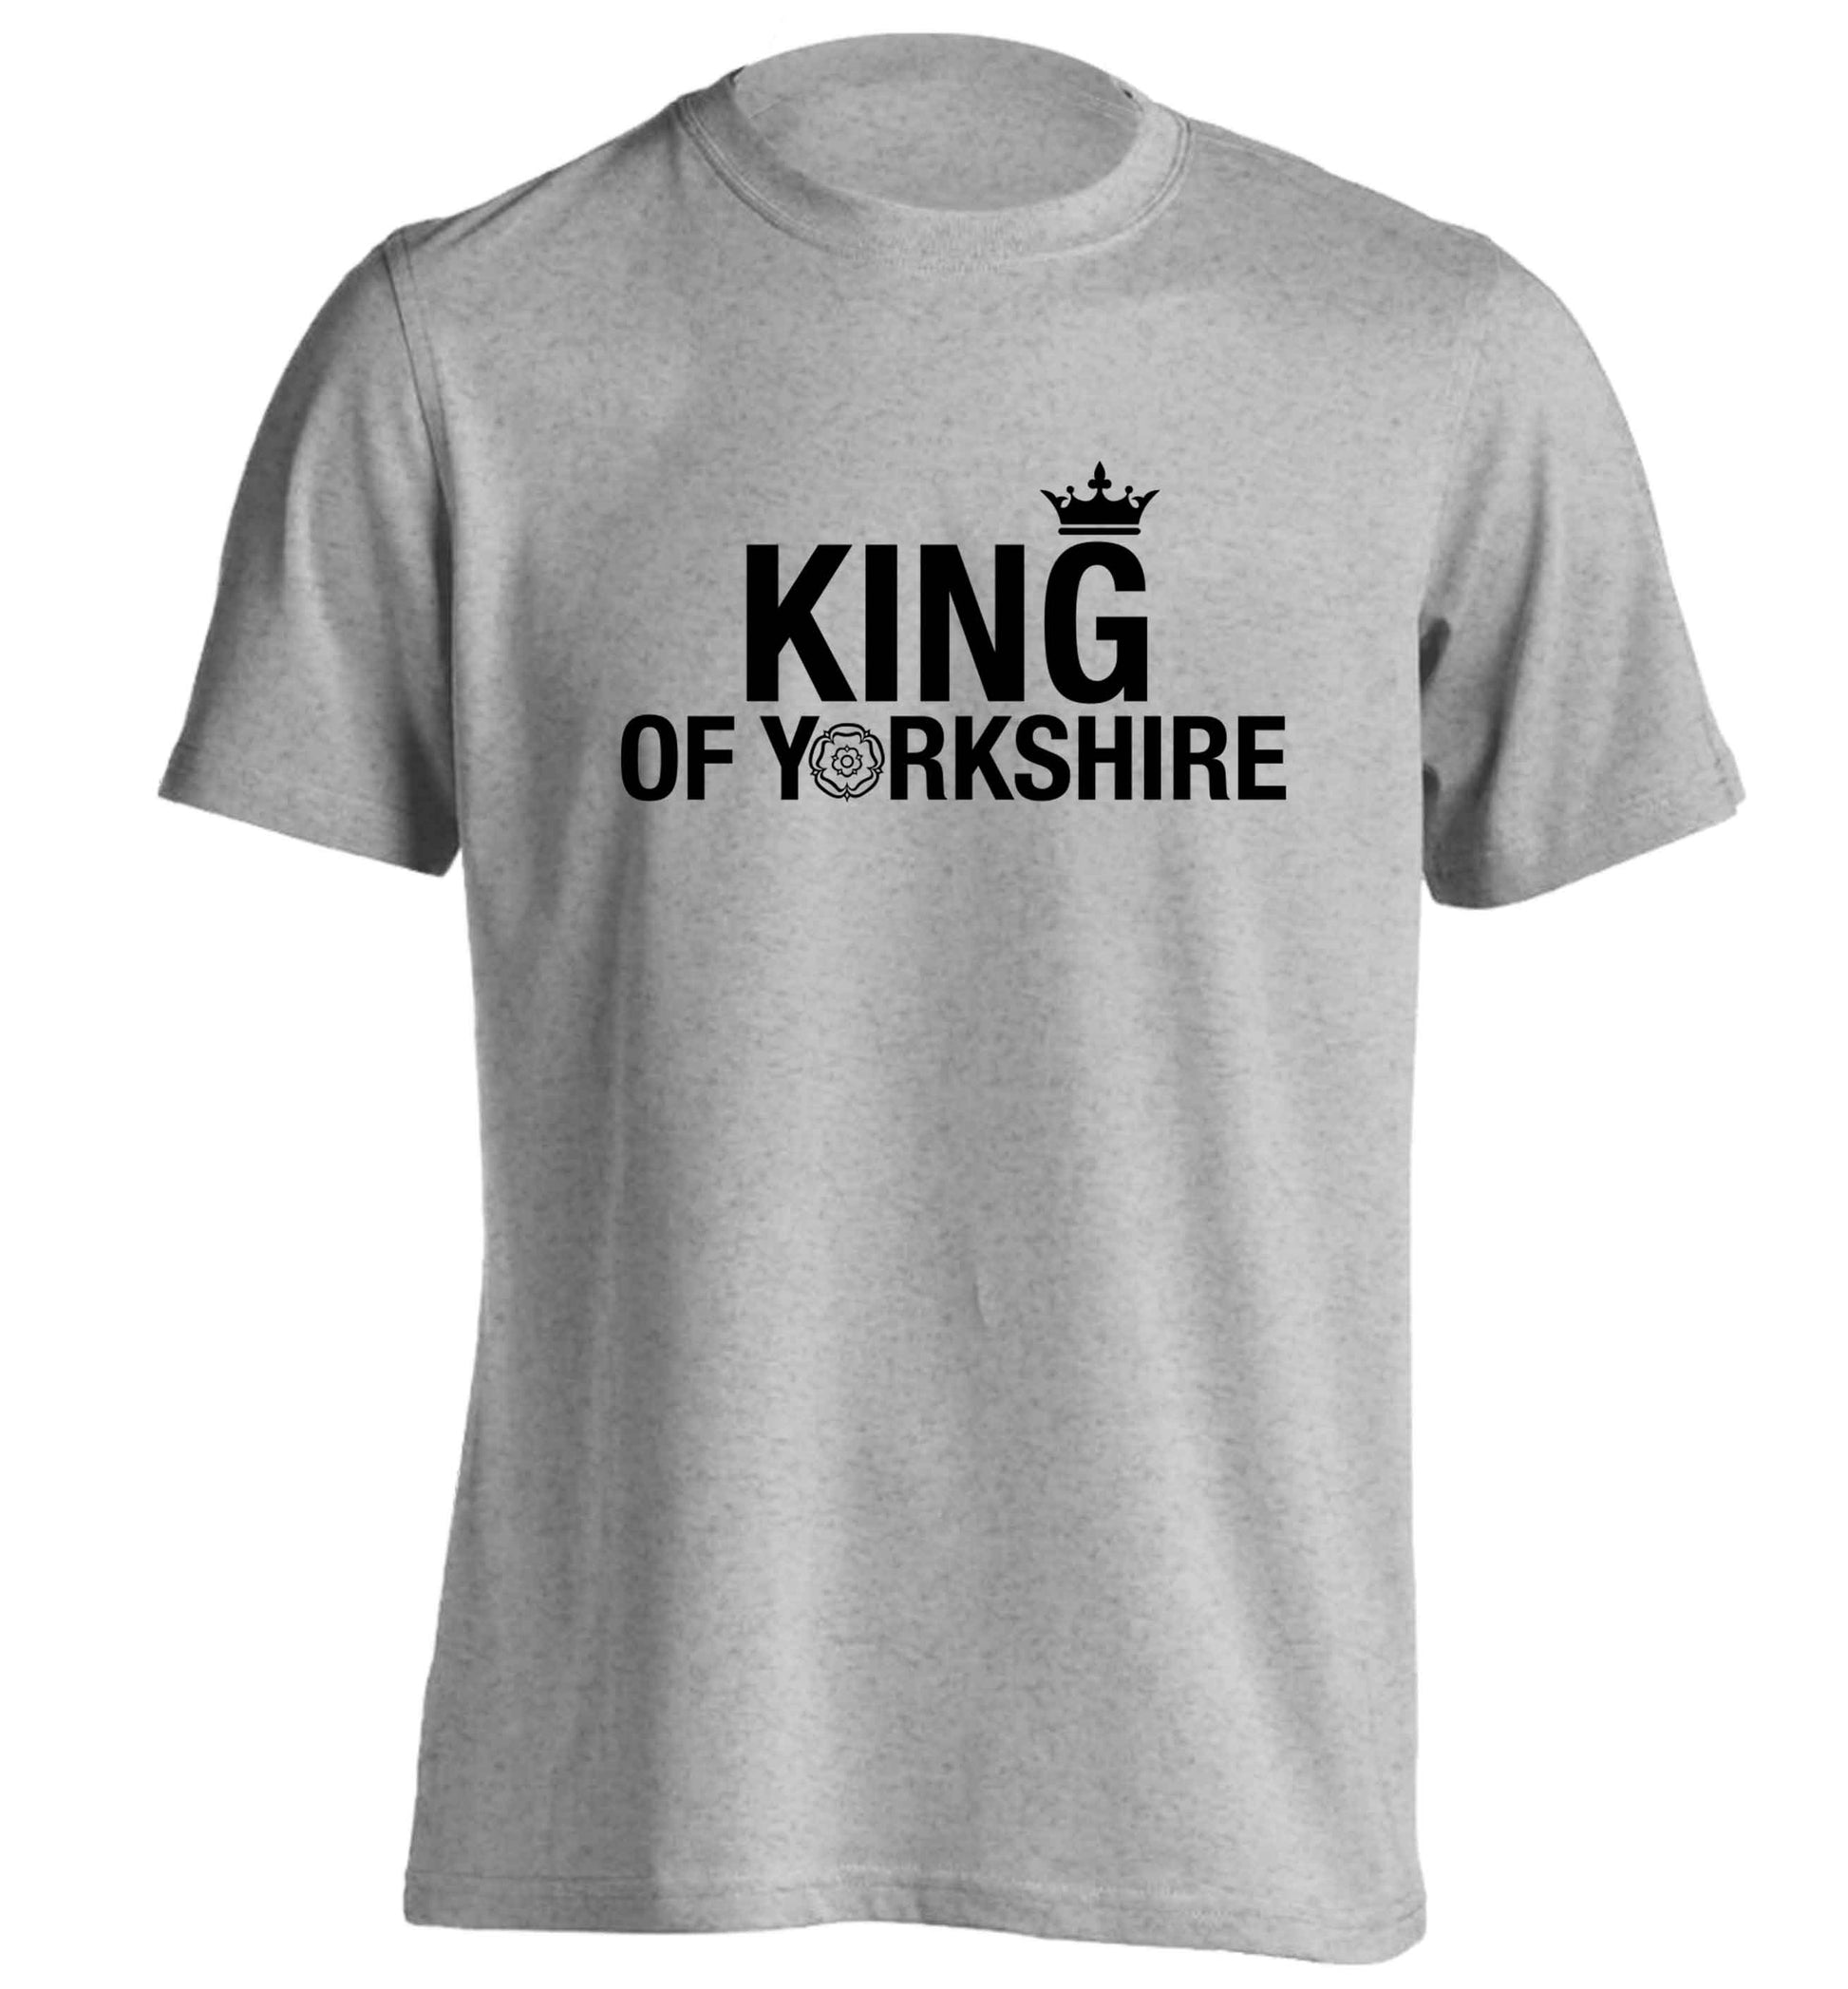 King of Yorkshire adults unisex grey Tshirt 2XL